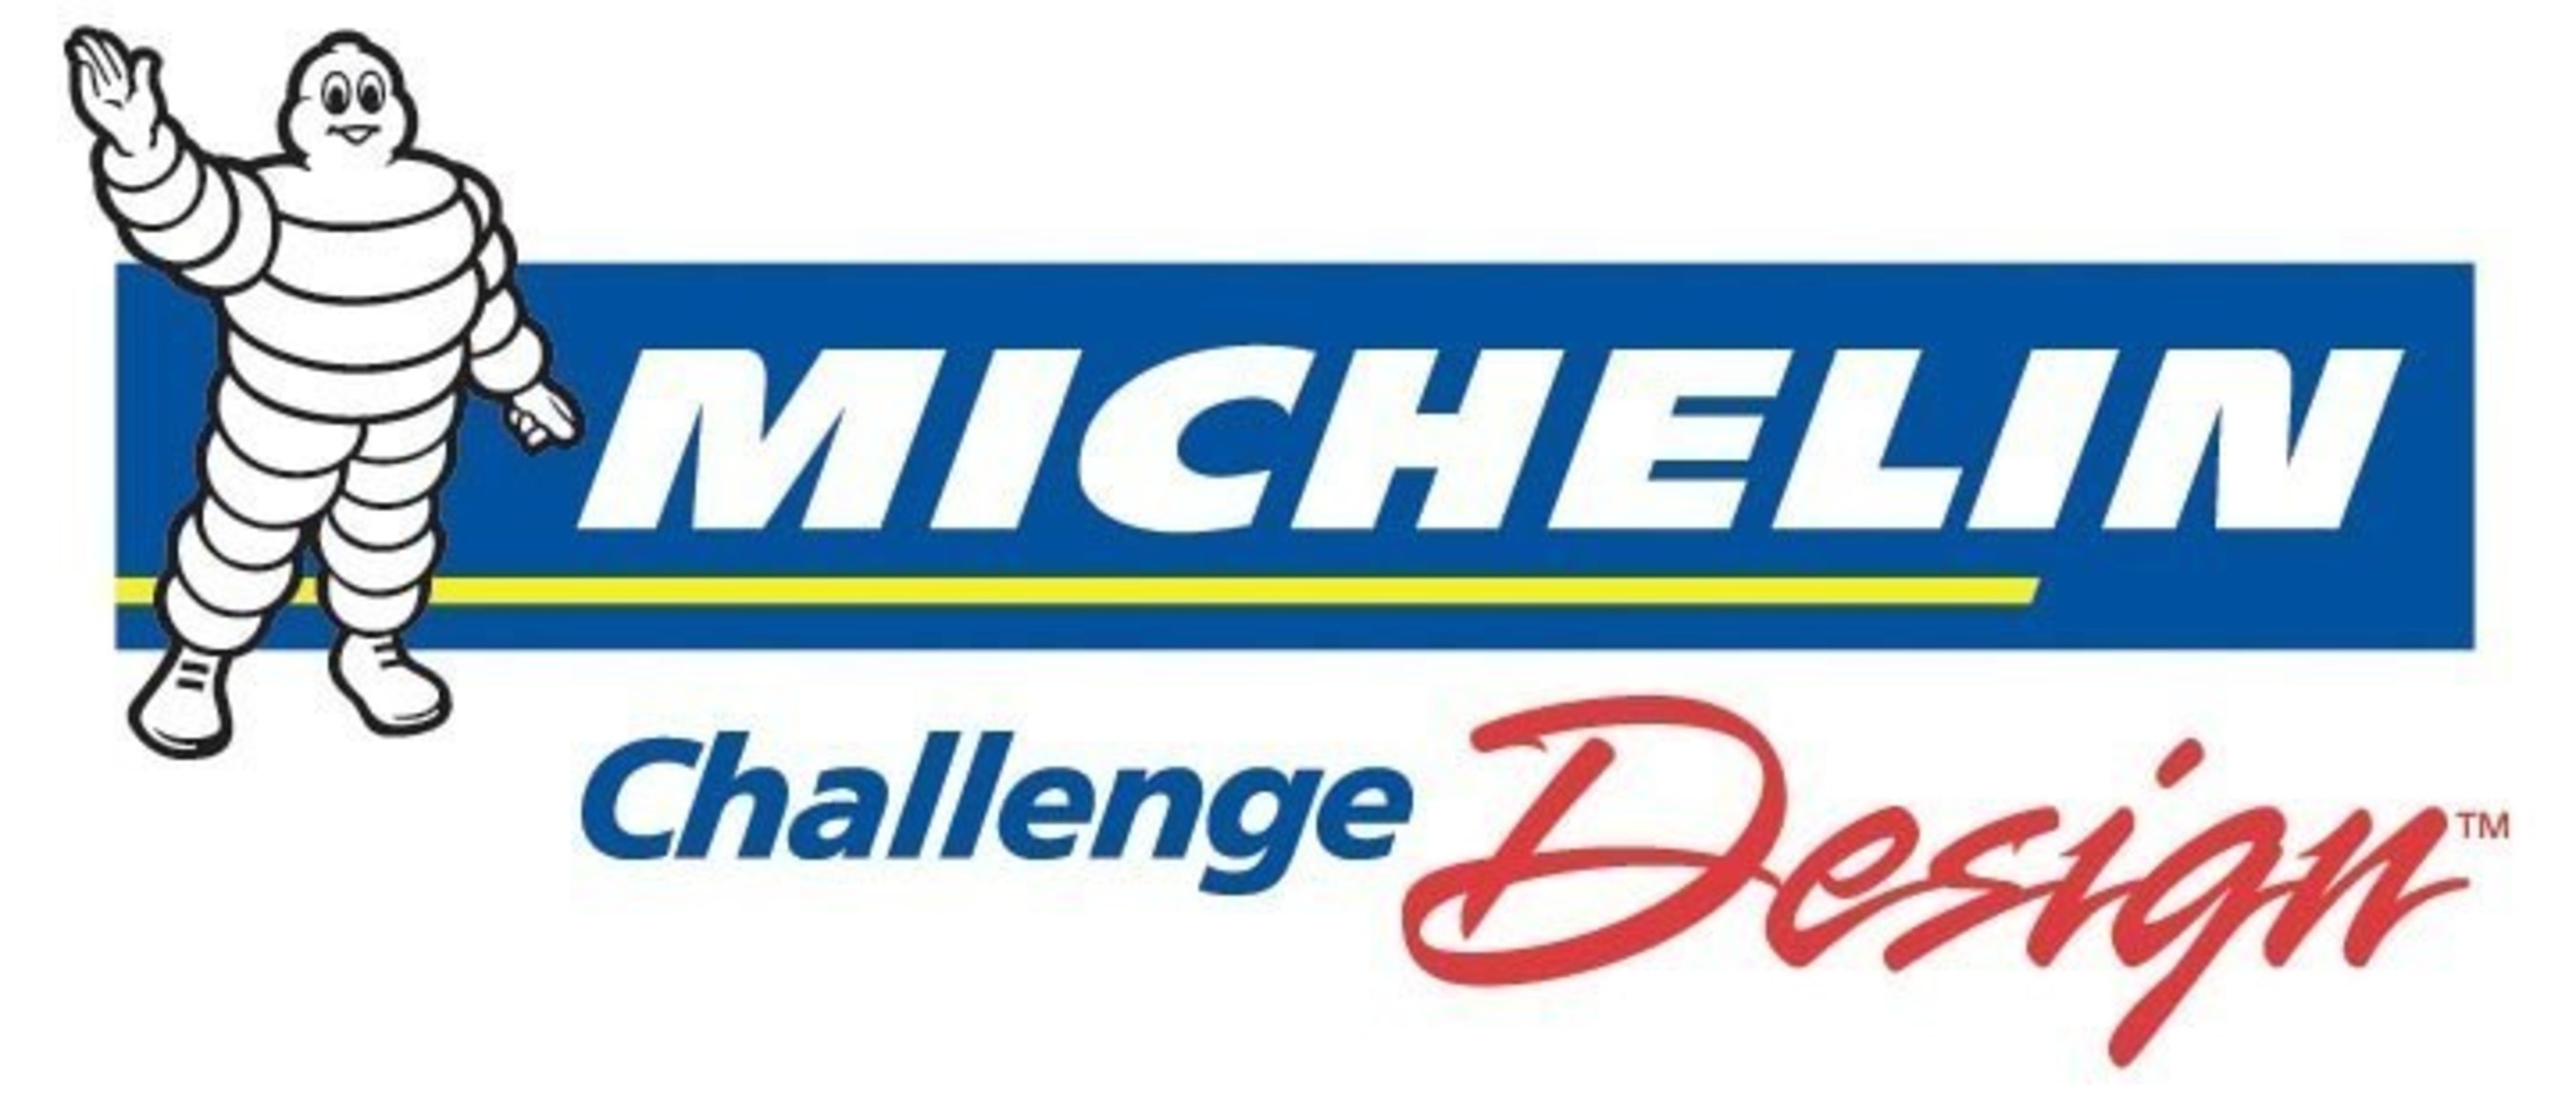 THEME ANNOUNCED FOR 2017 MICHELIN CHALLENGE DESIGN, 'Le Mans 2030: Design for the Win'